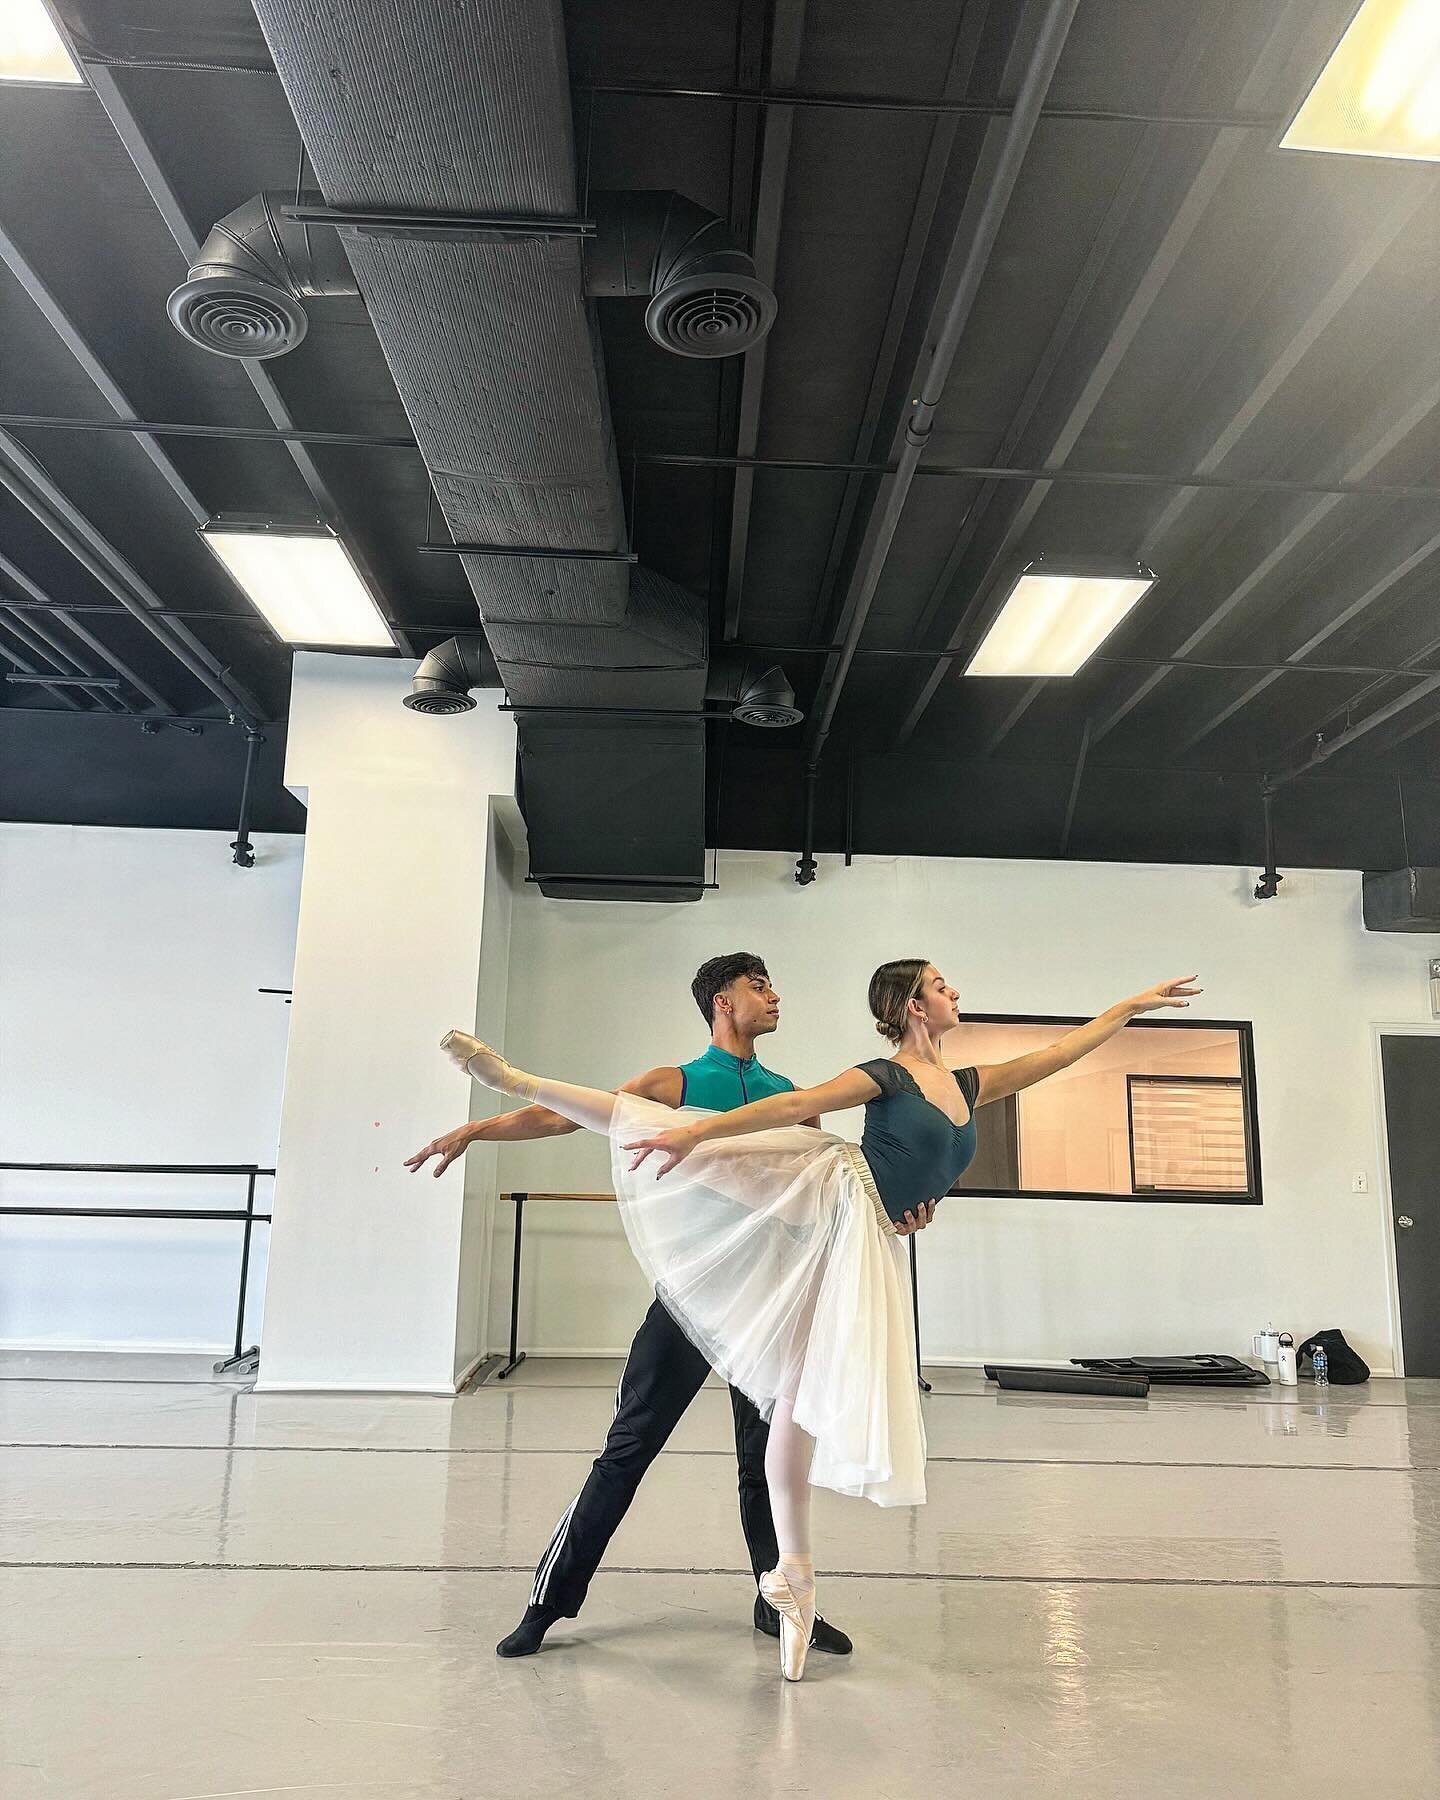 Spring Gala sneak peek: Gabriel @gabriella.ballerina_ and Mr. Ryan bring &lsquo;Coppelia Ballet&rsquo; to life. Pure dedication and talent in every rehearsal! 🌸✨ #Proud #BalletMagic #ballet #ballerina